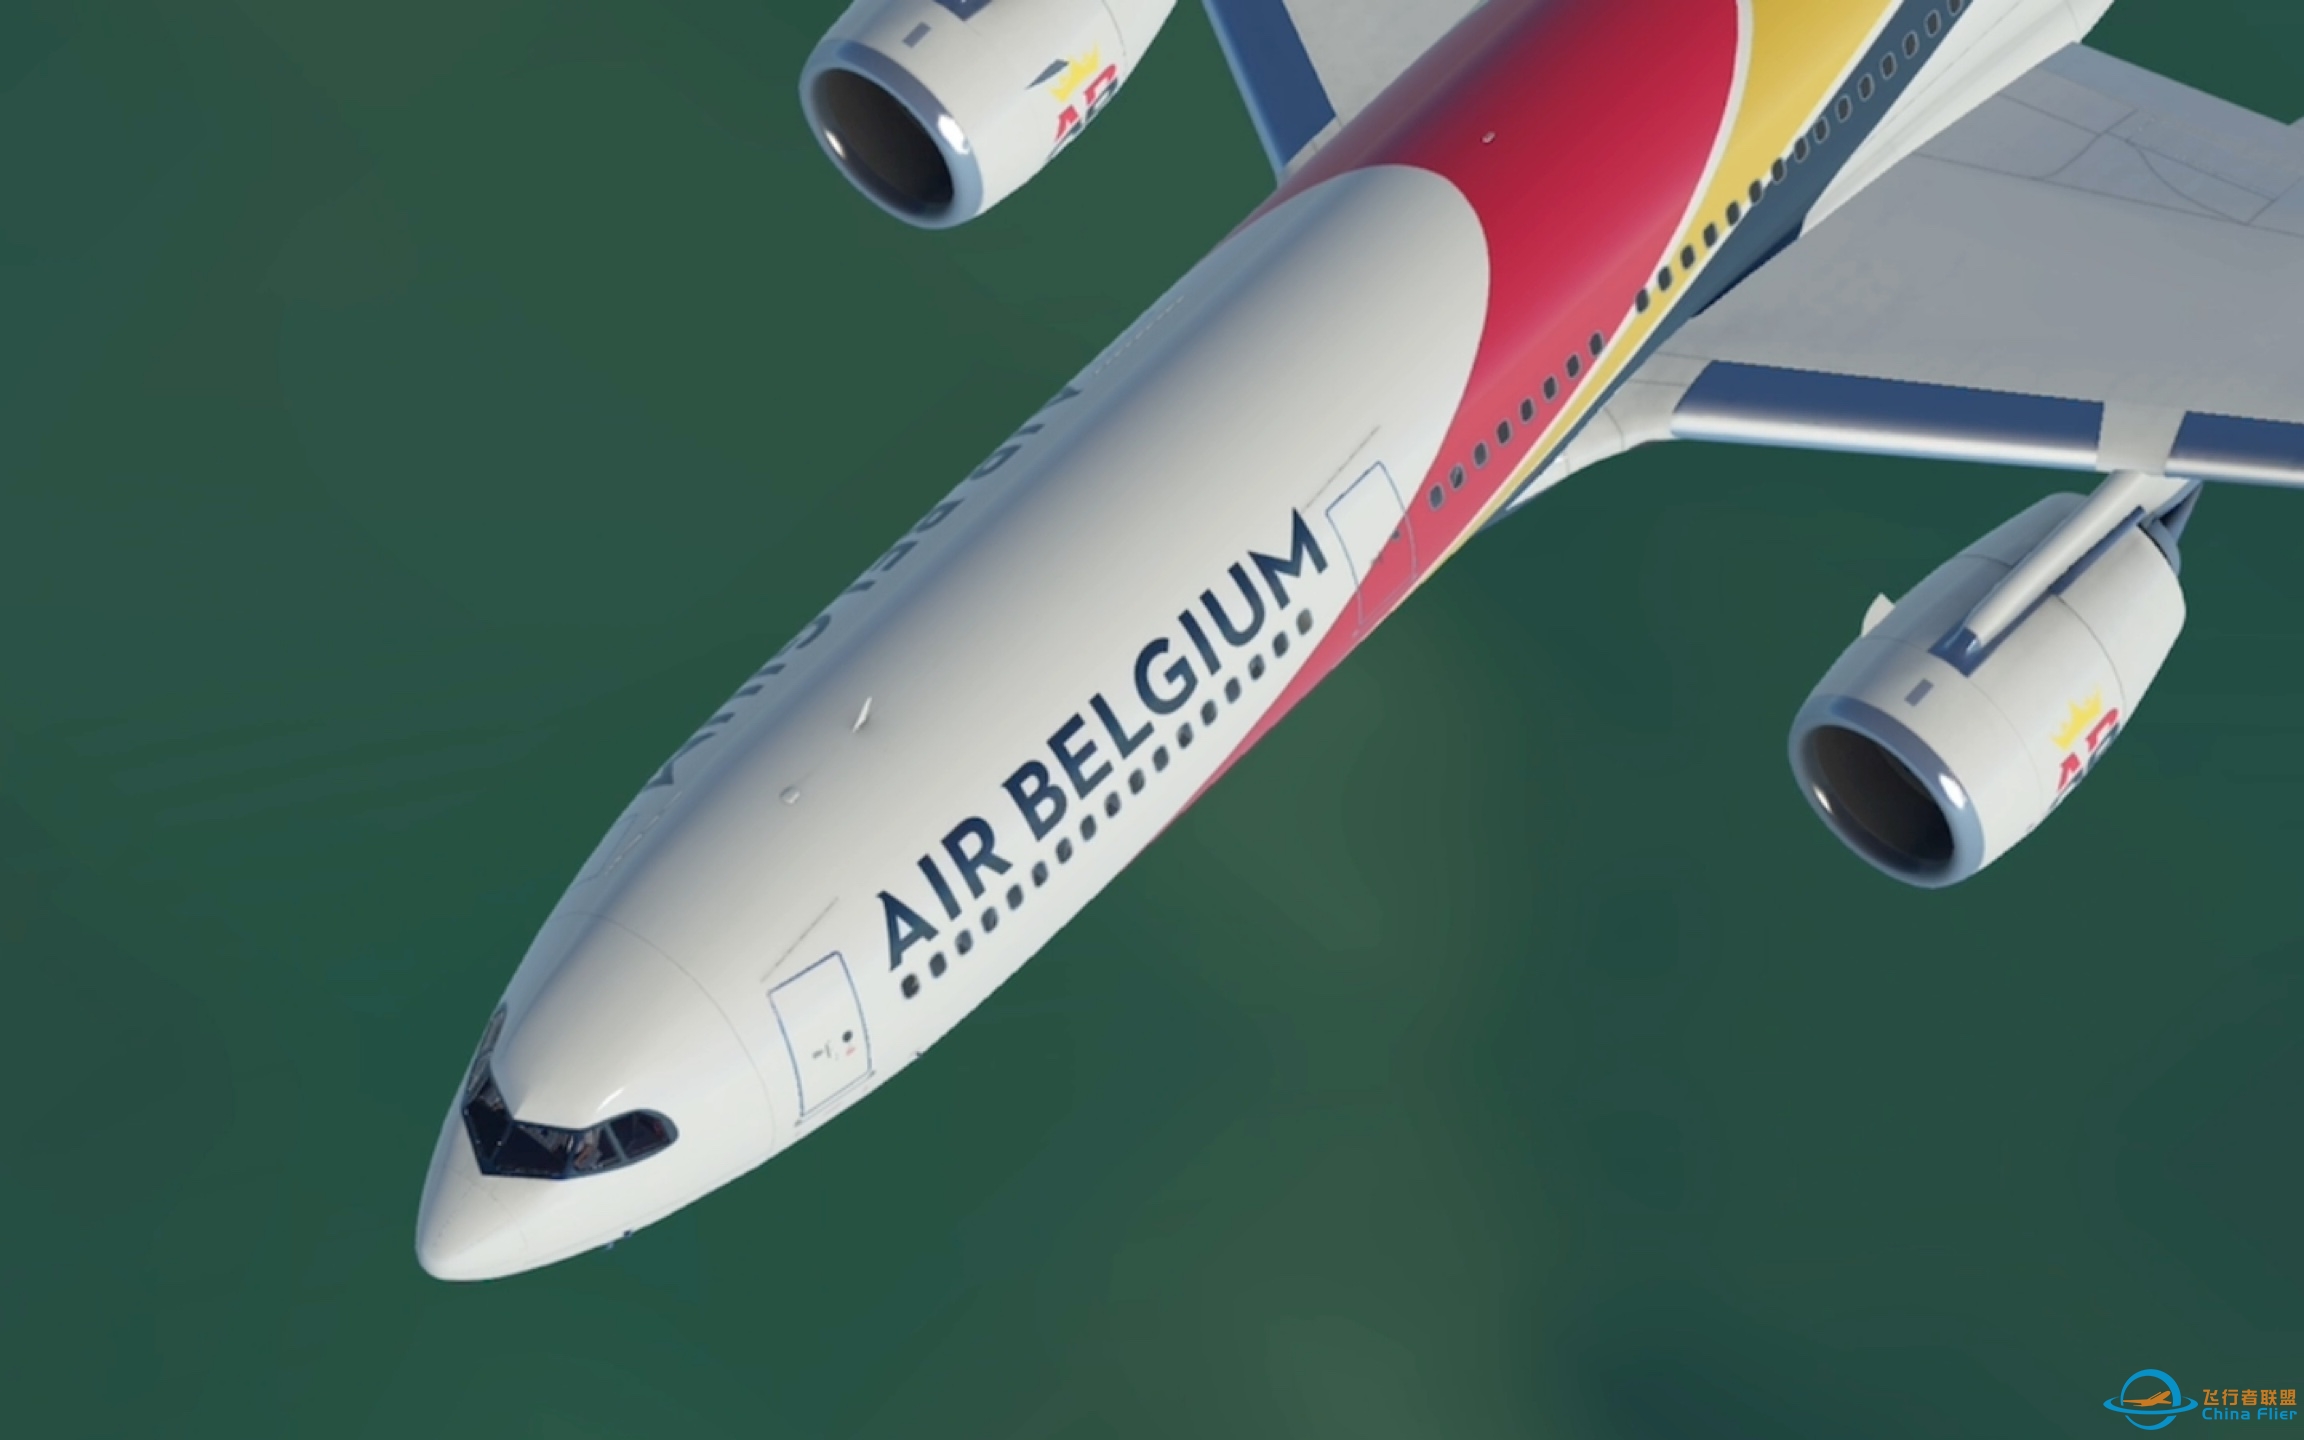 【Infinite flight】比利时航空A330neo优雅翱翔 翻拍Airbus 小剪-4379 